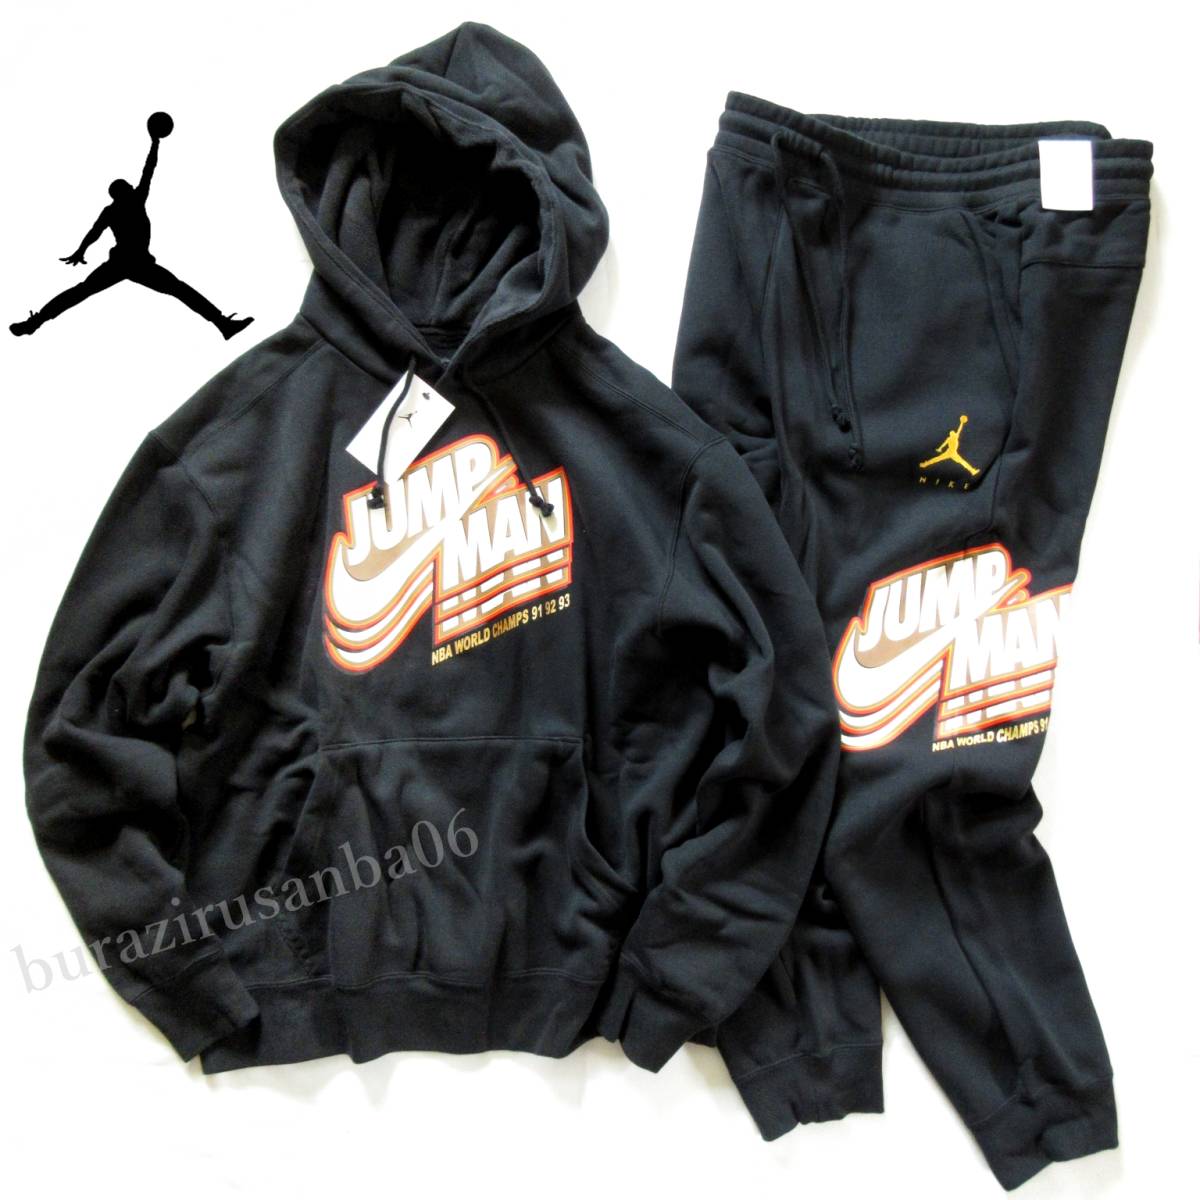  men's XL* unused regular price 1.7 ten thousand NIKE Nike sweat JORDAN Jordan Jump man reverse side f lease Parker pants setup black 